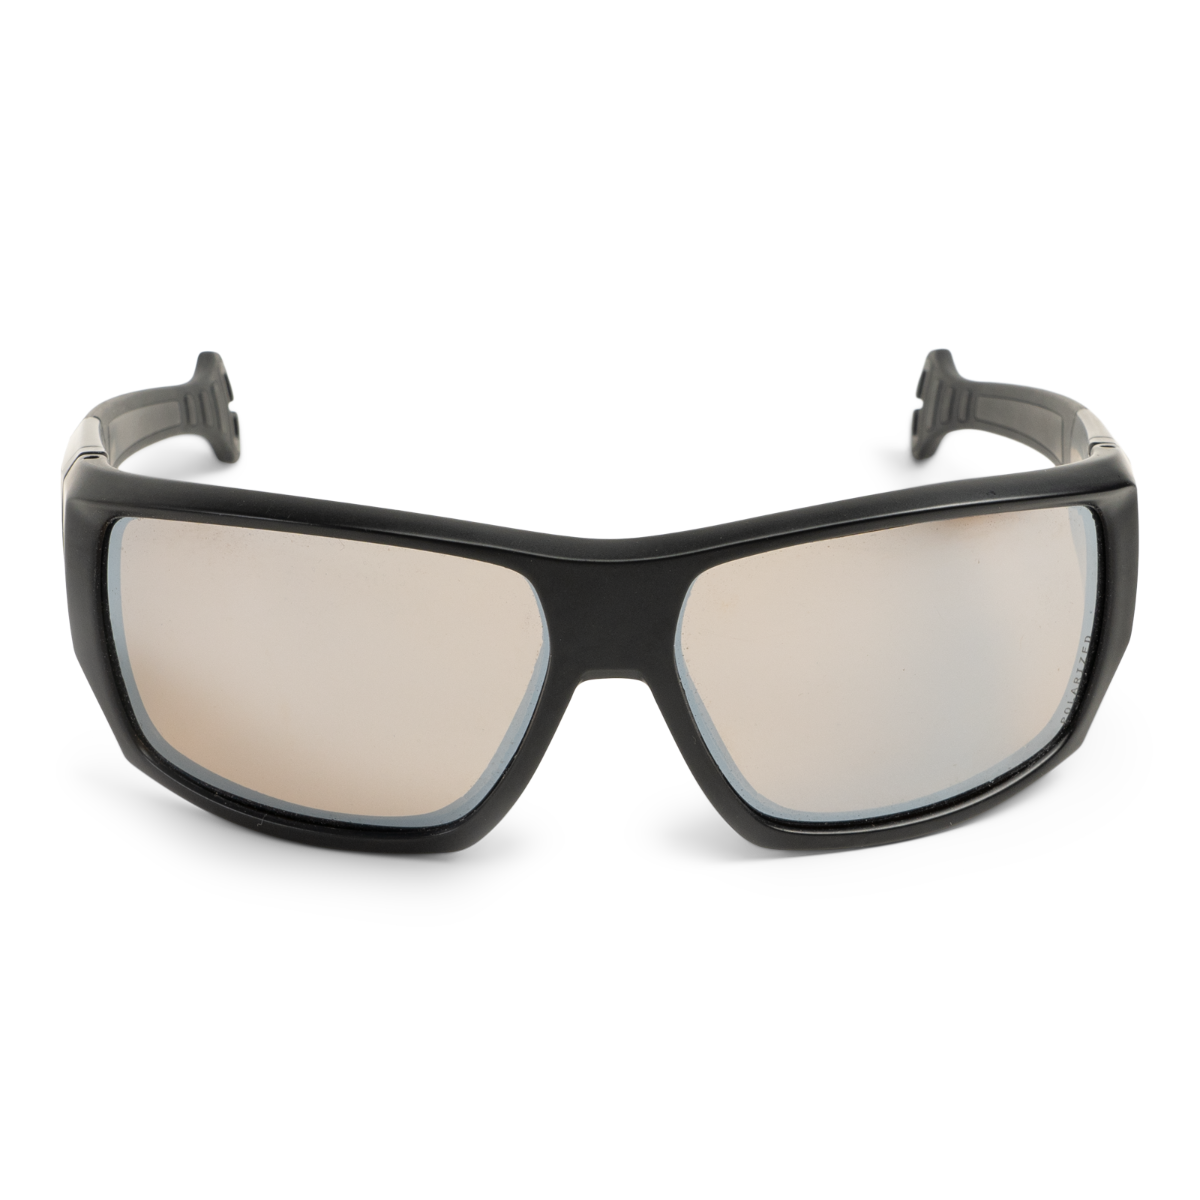 Sea-Doo Floating Polarized Wave Sunglasses